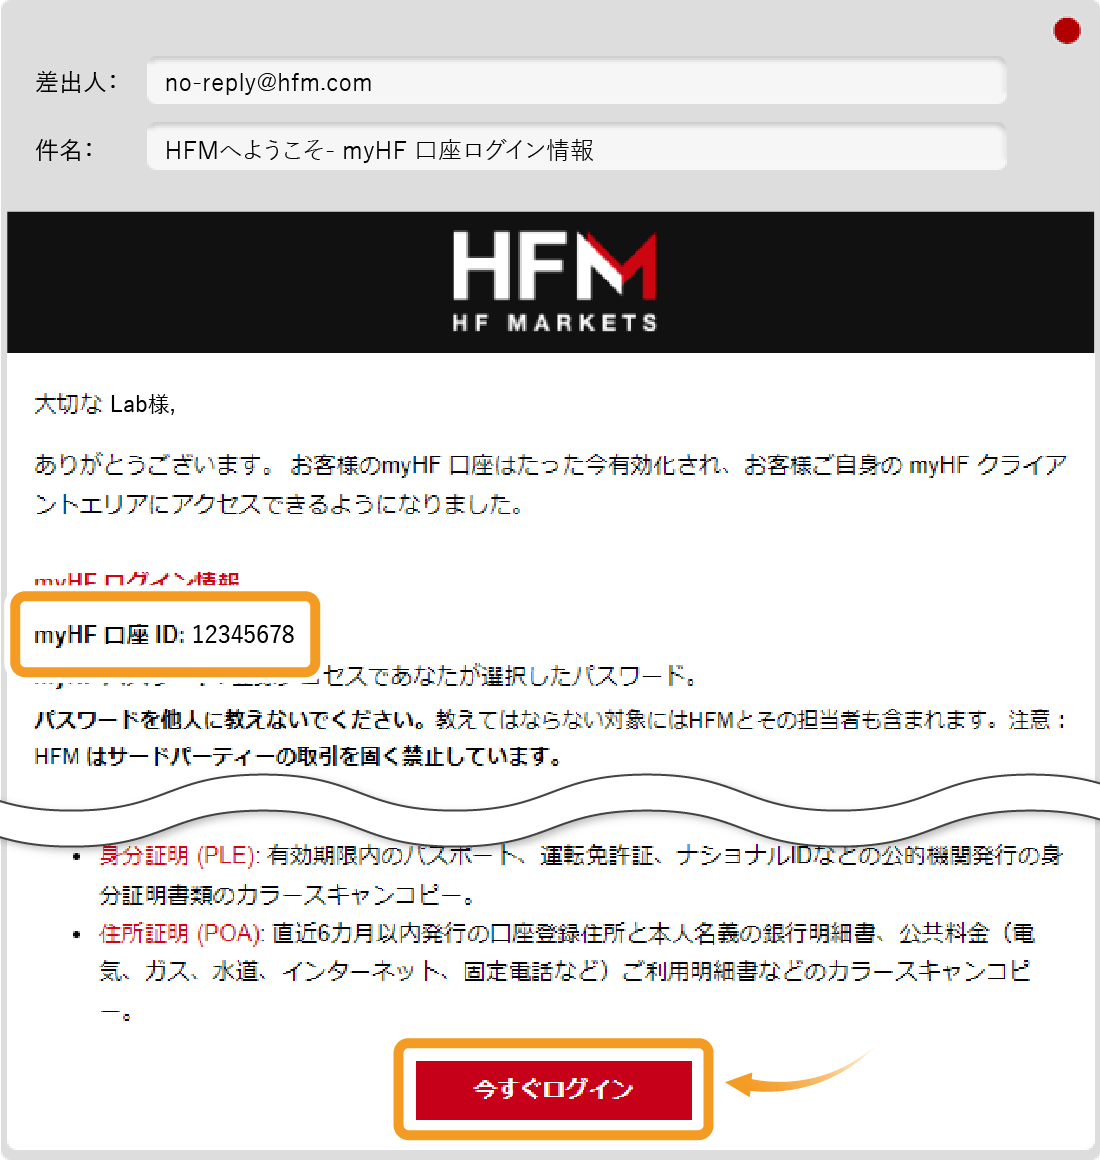 HFMログイン情報のメール画面